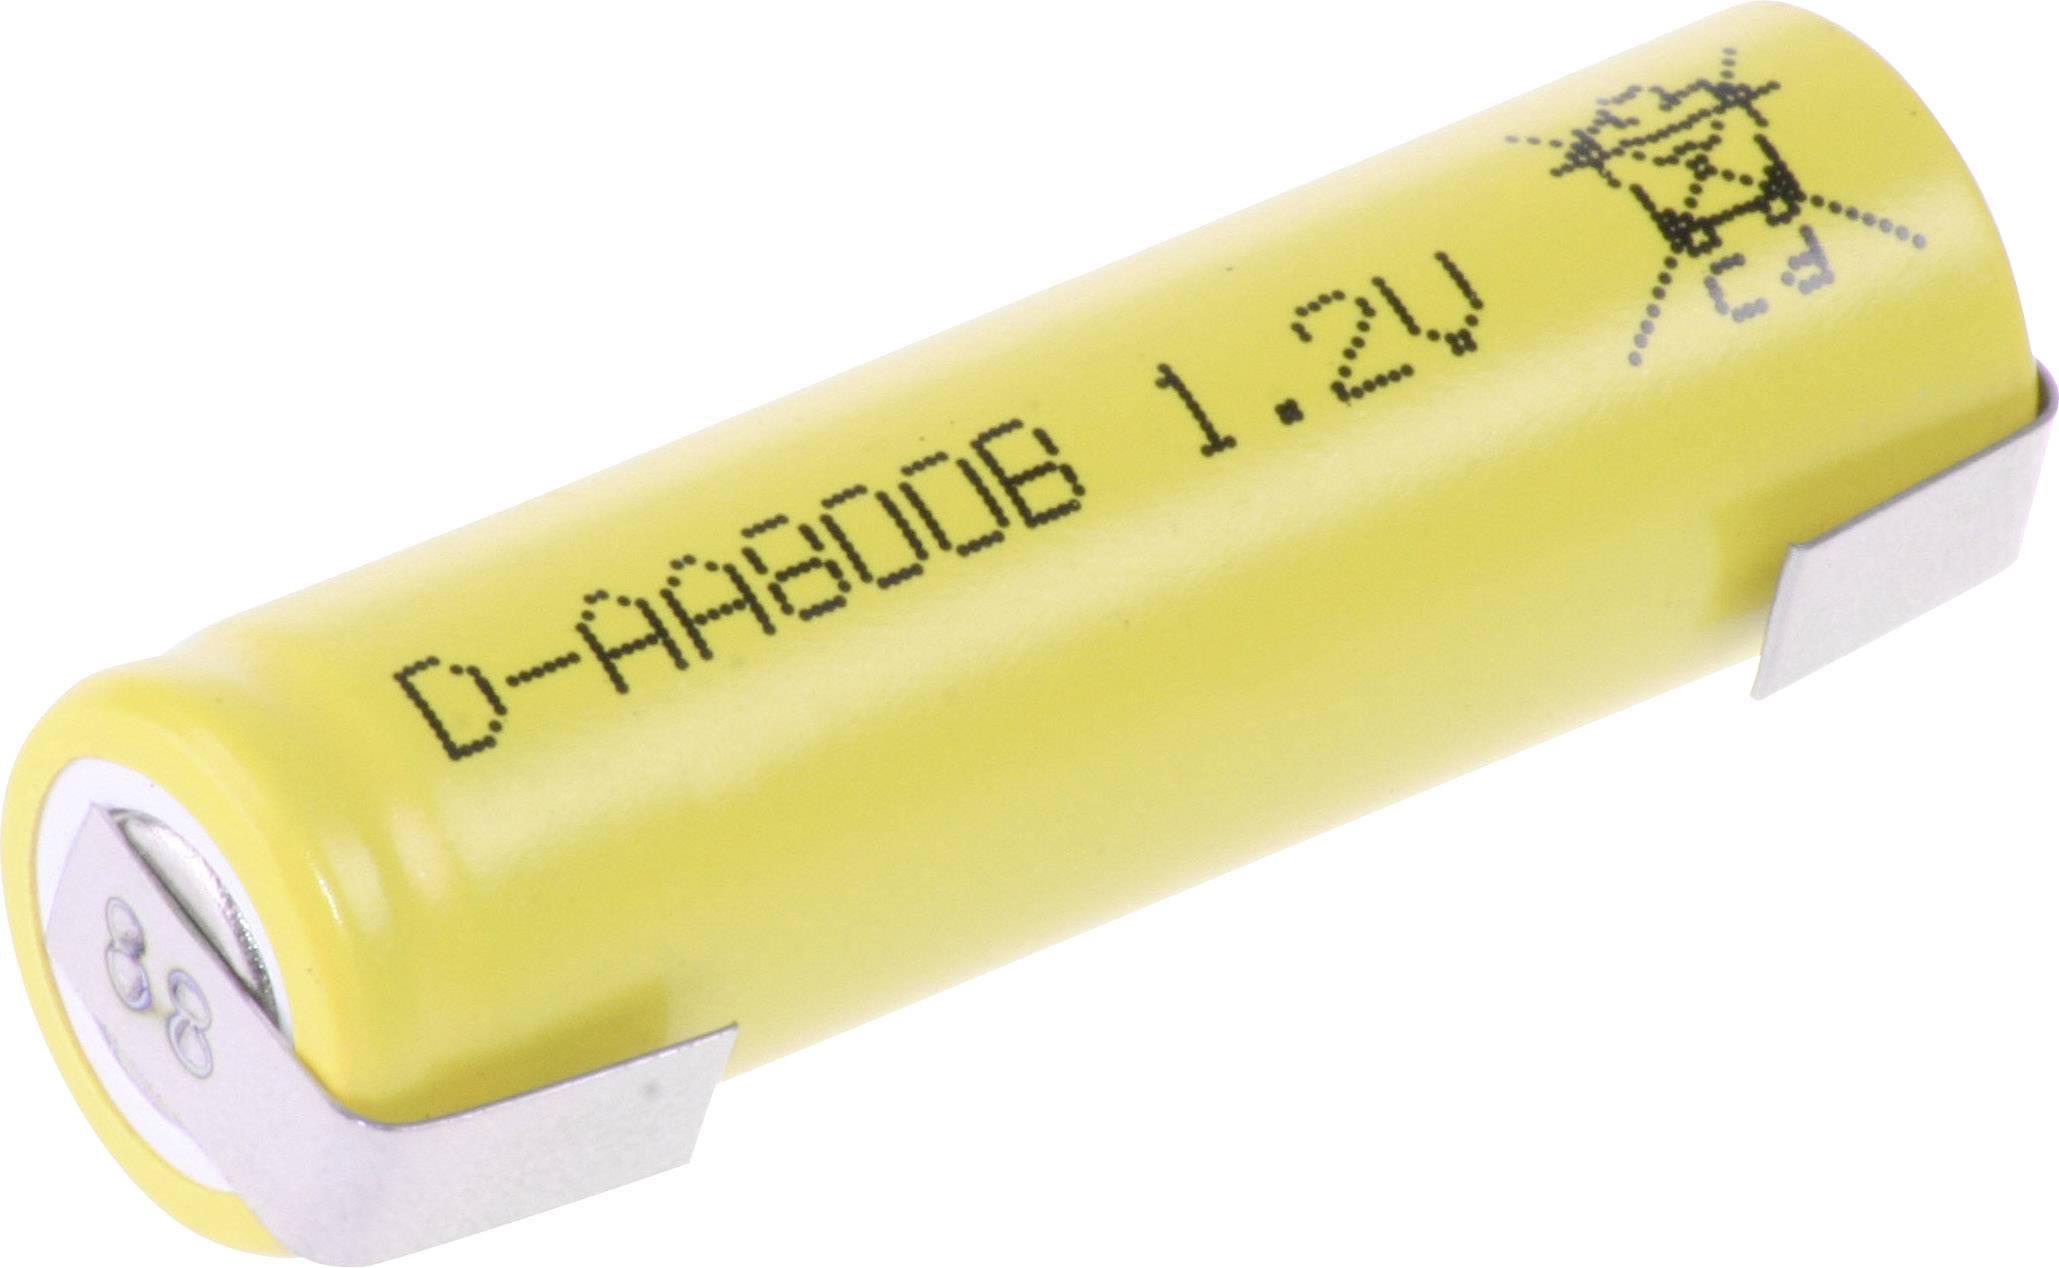 Individuales-celda batería NiMH aa 1,2v 2400mah 50x14,5mm Flat Top super-Cell 